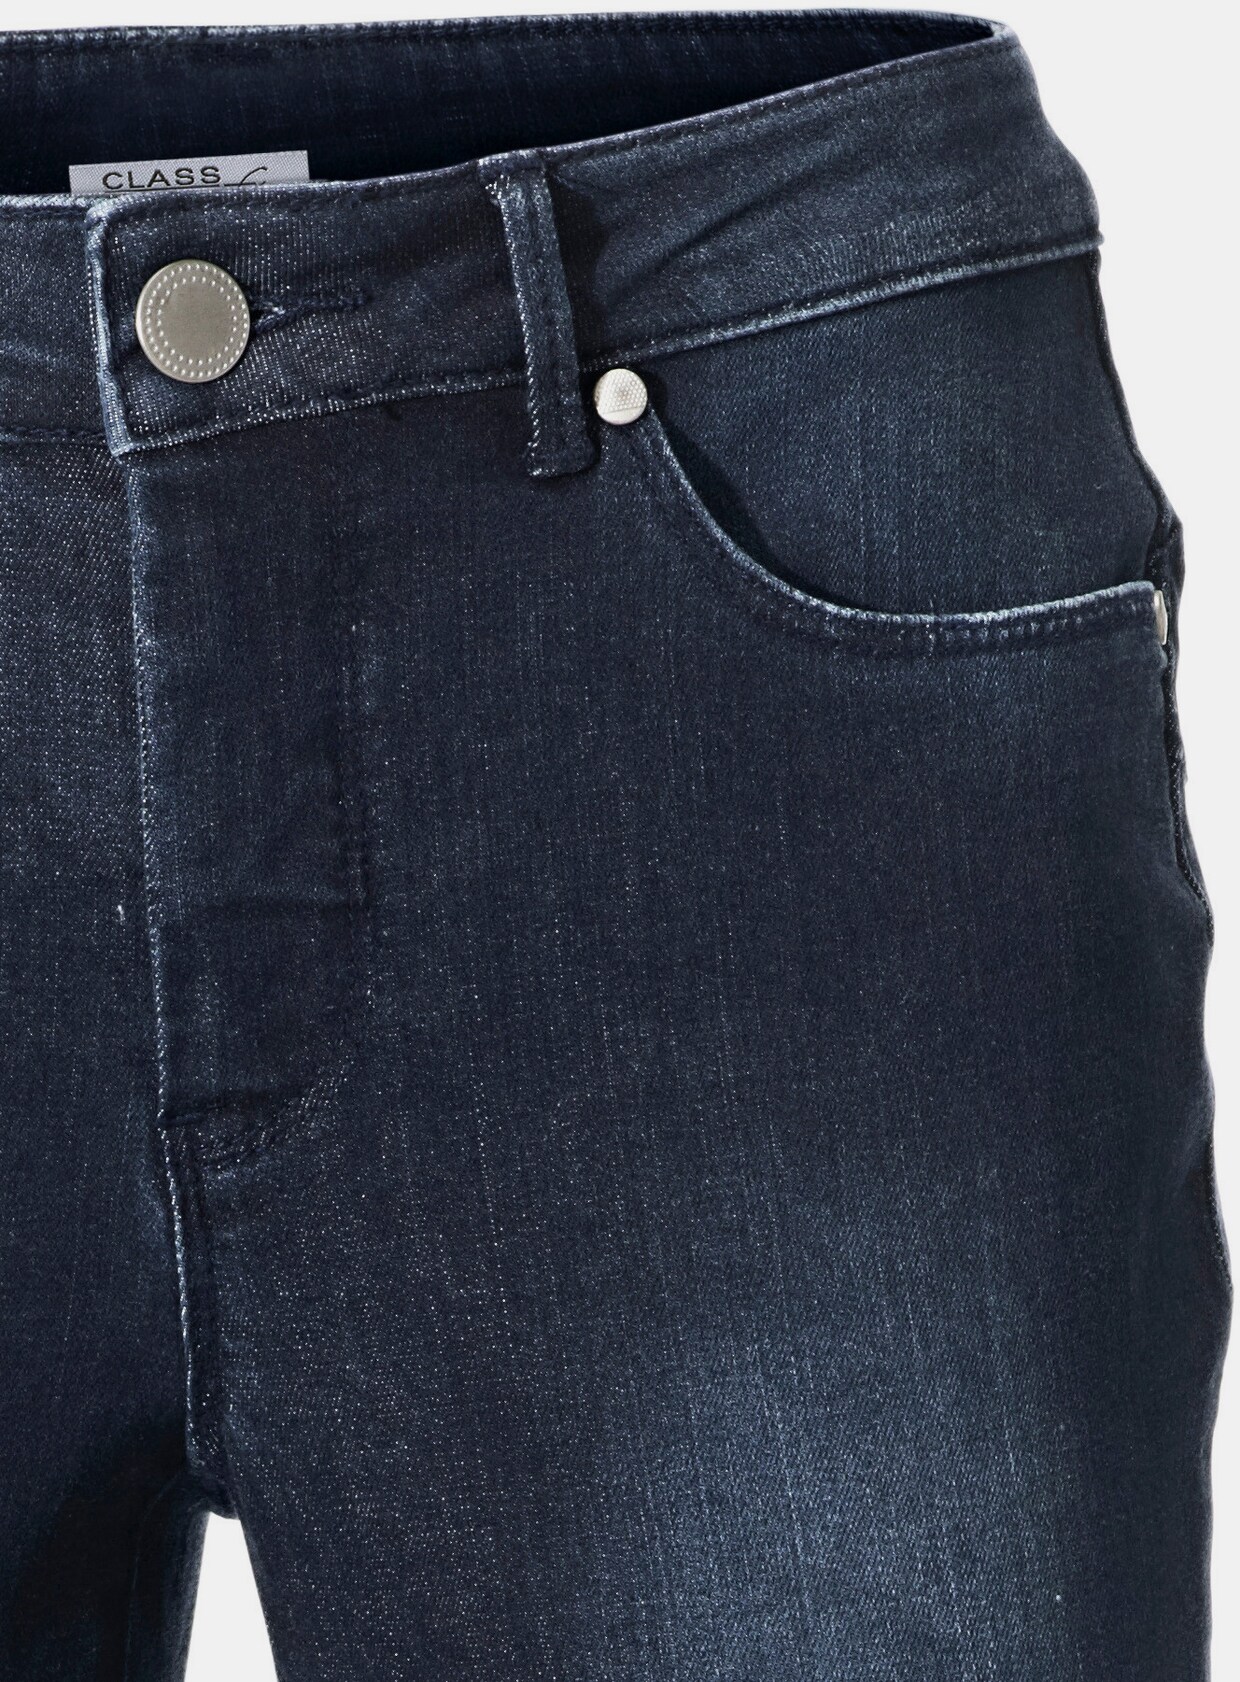 heine 'Buik weg'-jeans - dark denim